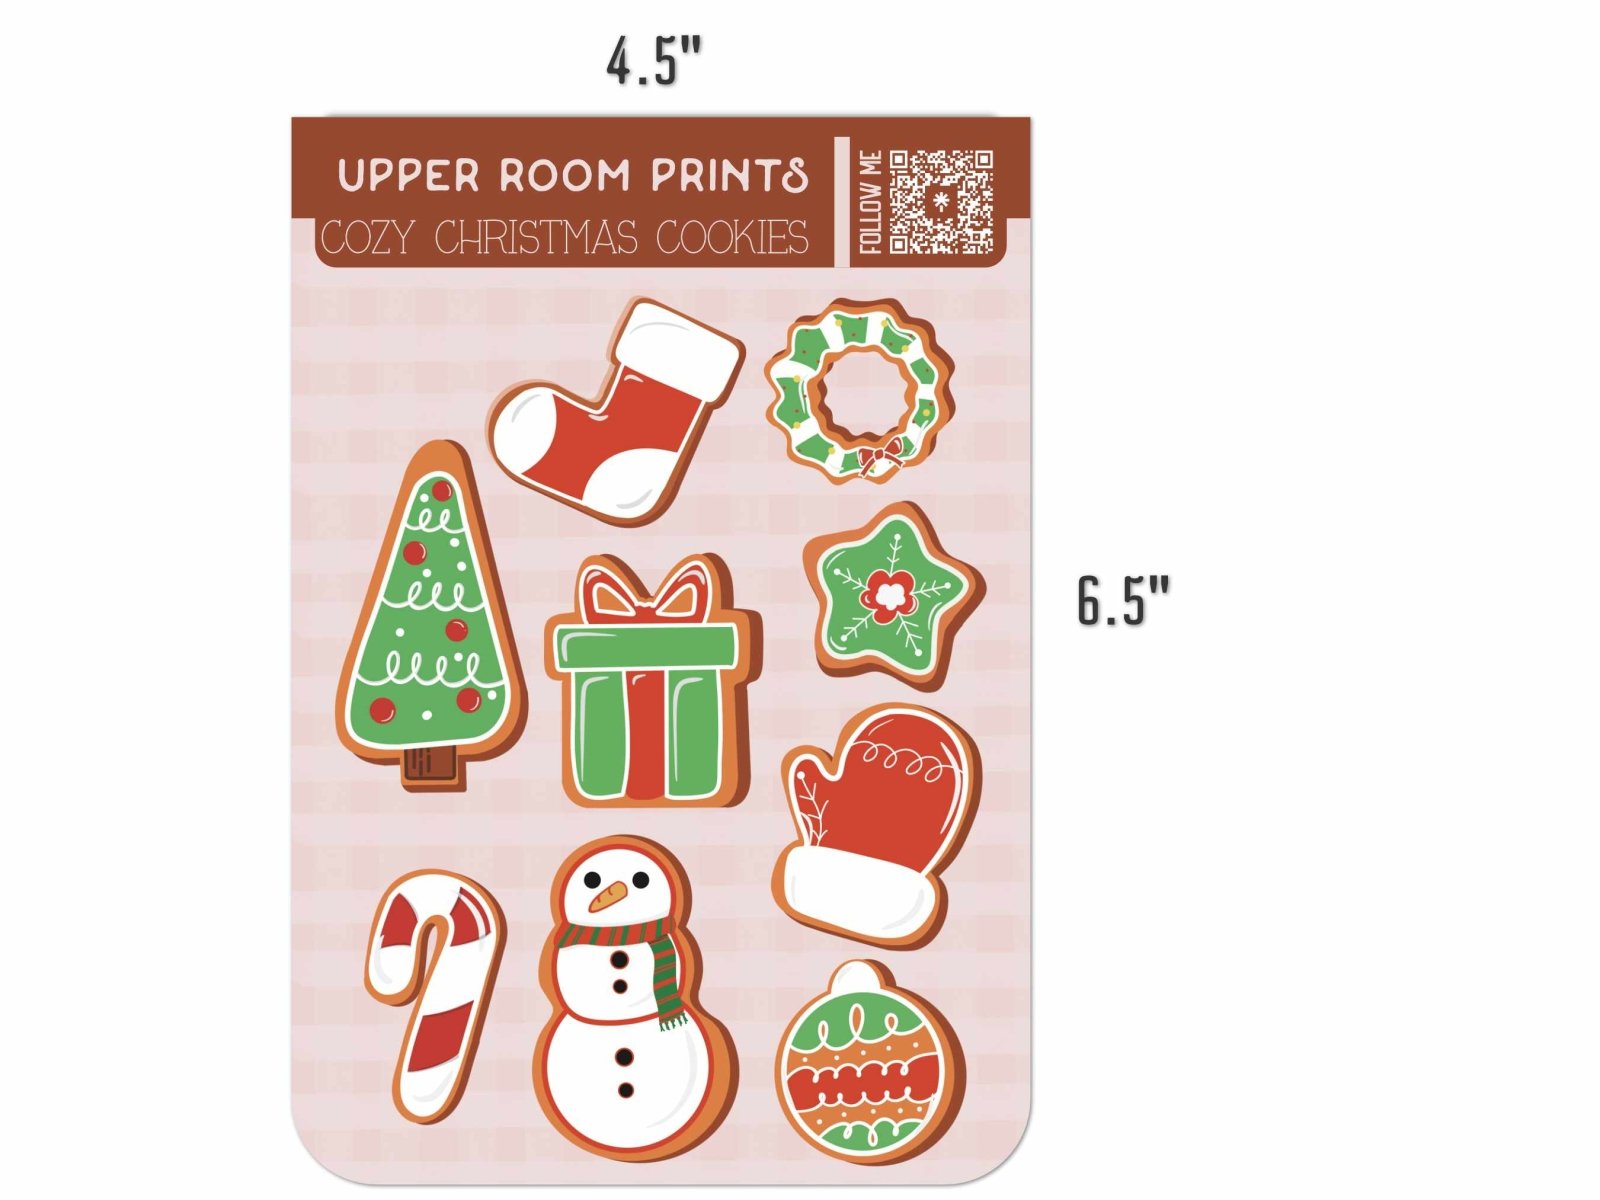 Cozy Christmas Cookies Sticker Sheet - Stickers - UpperRoomPrints